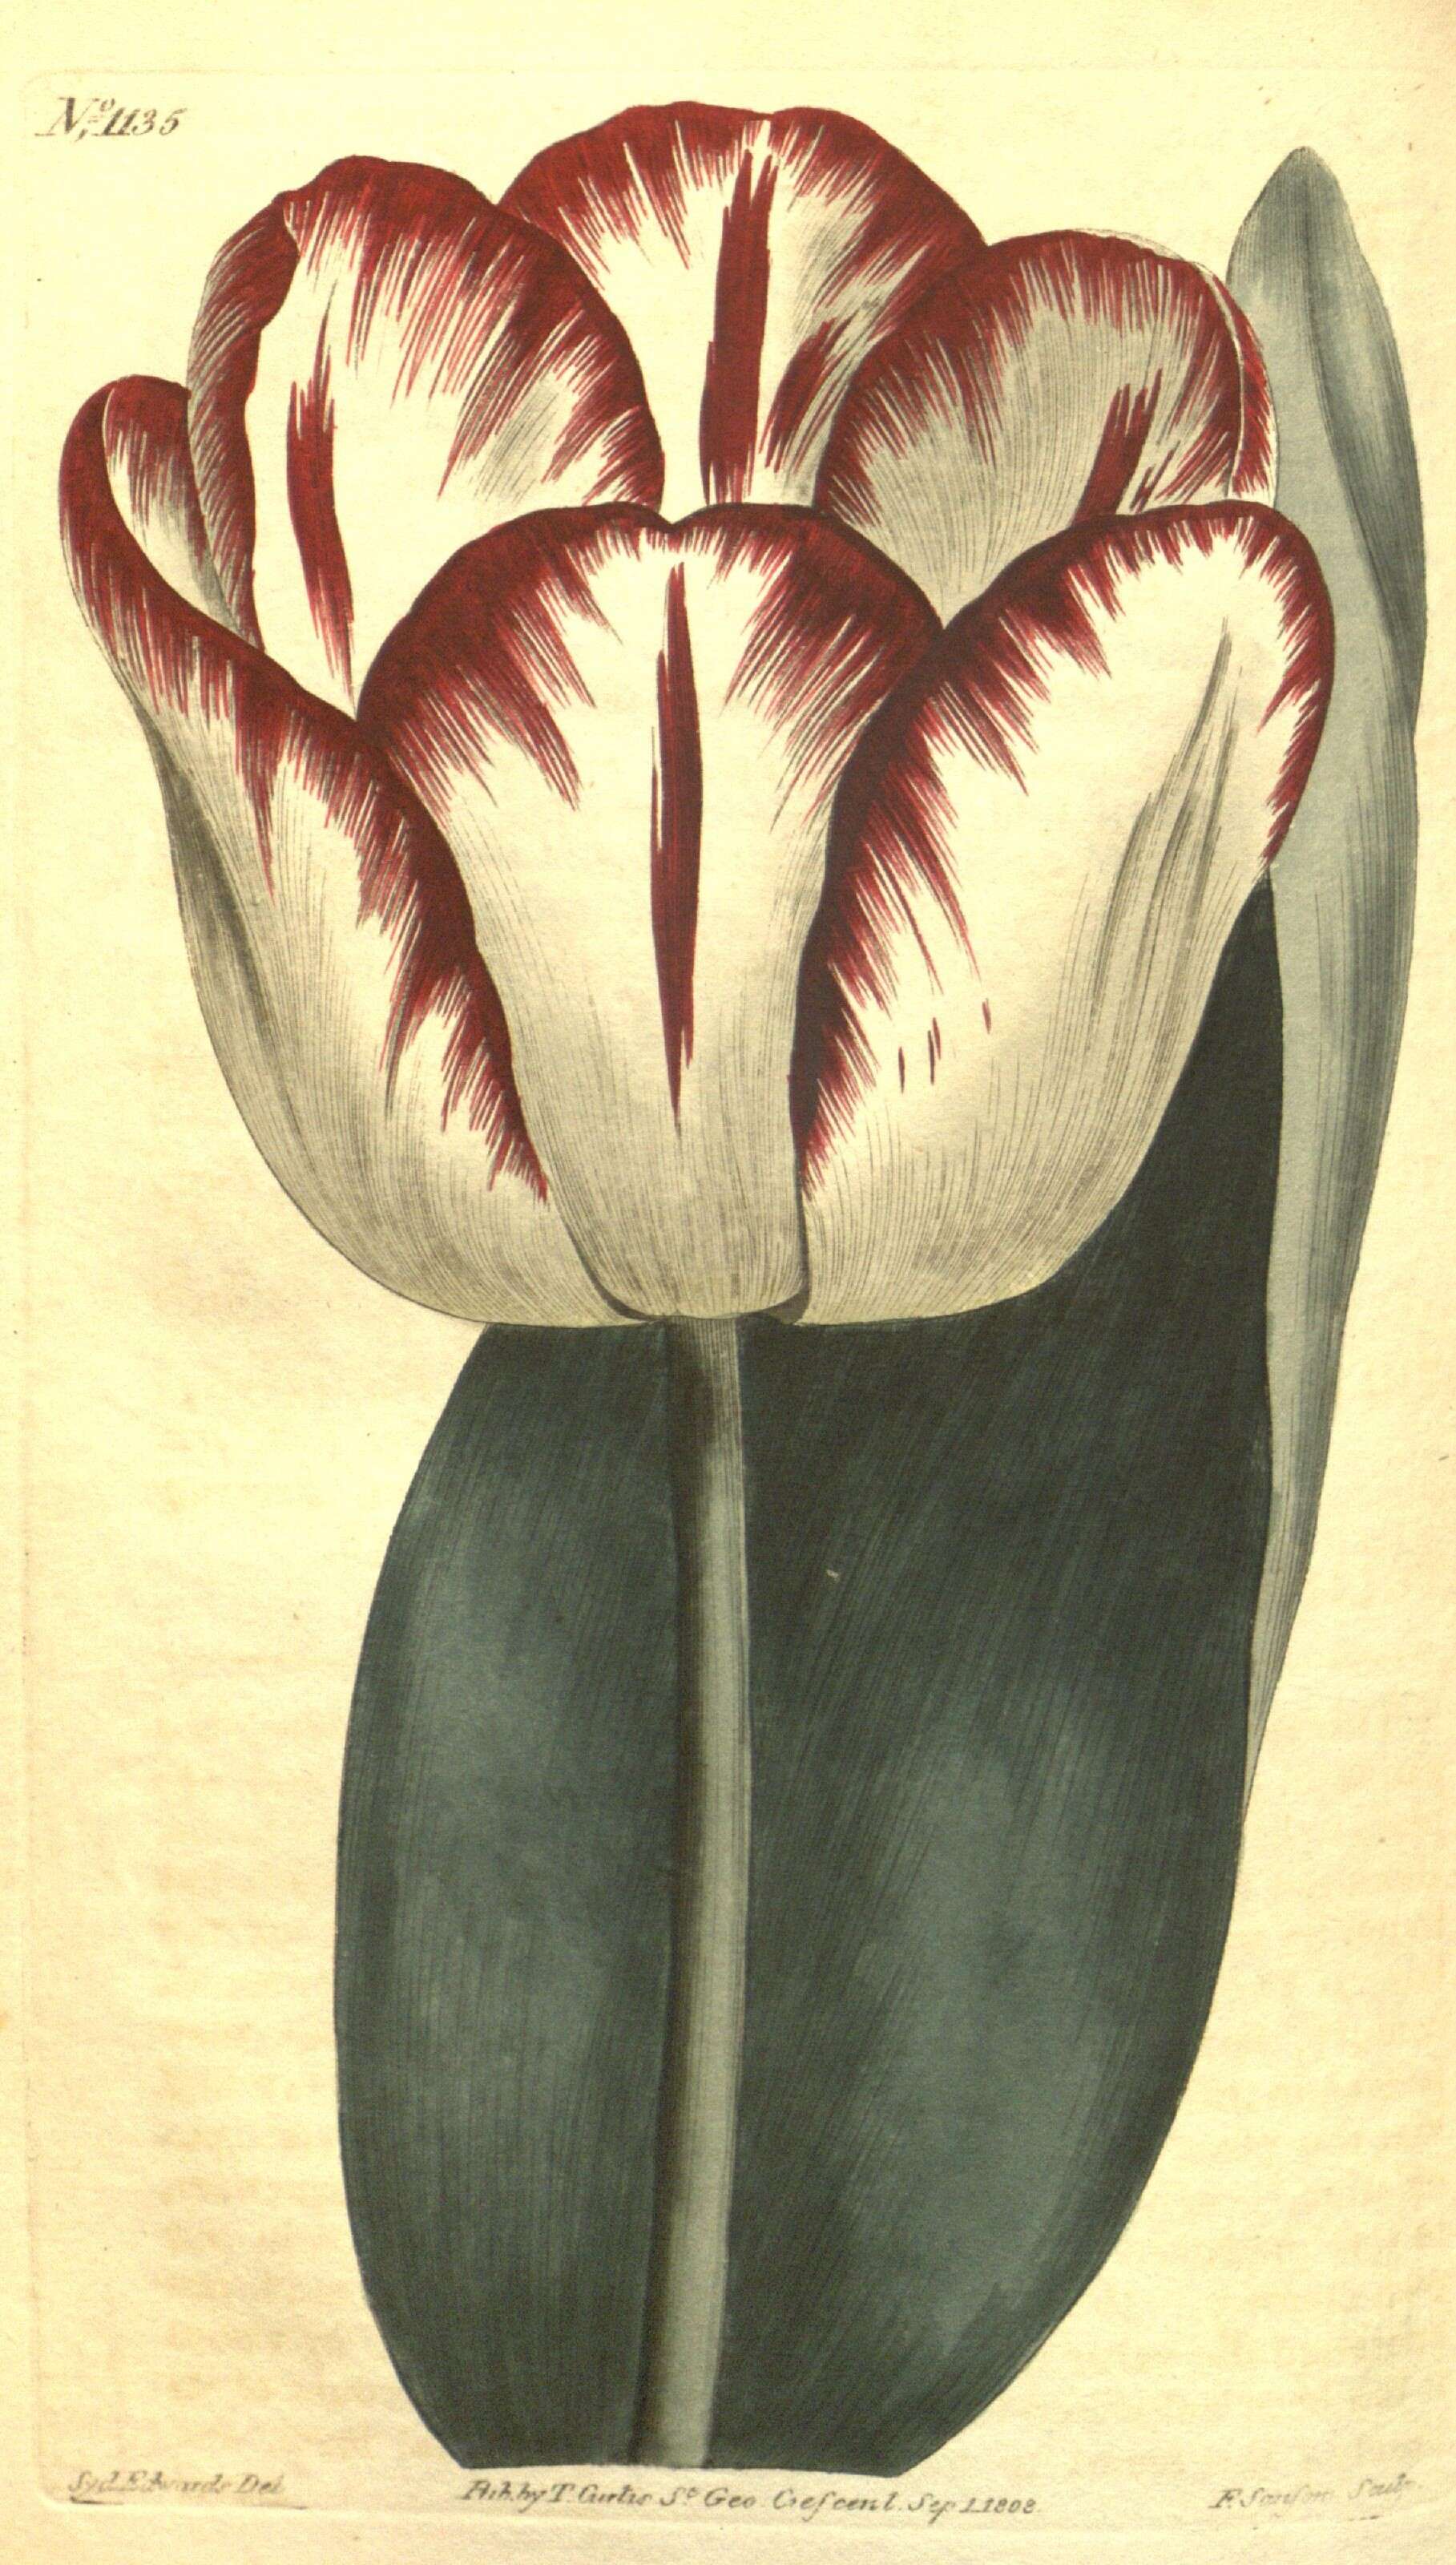 Image of Didier's tulip